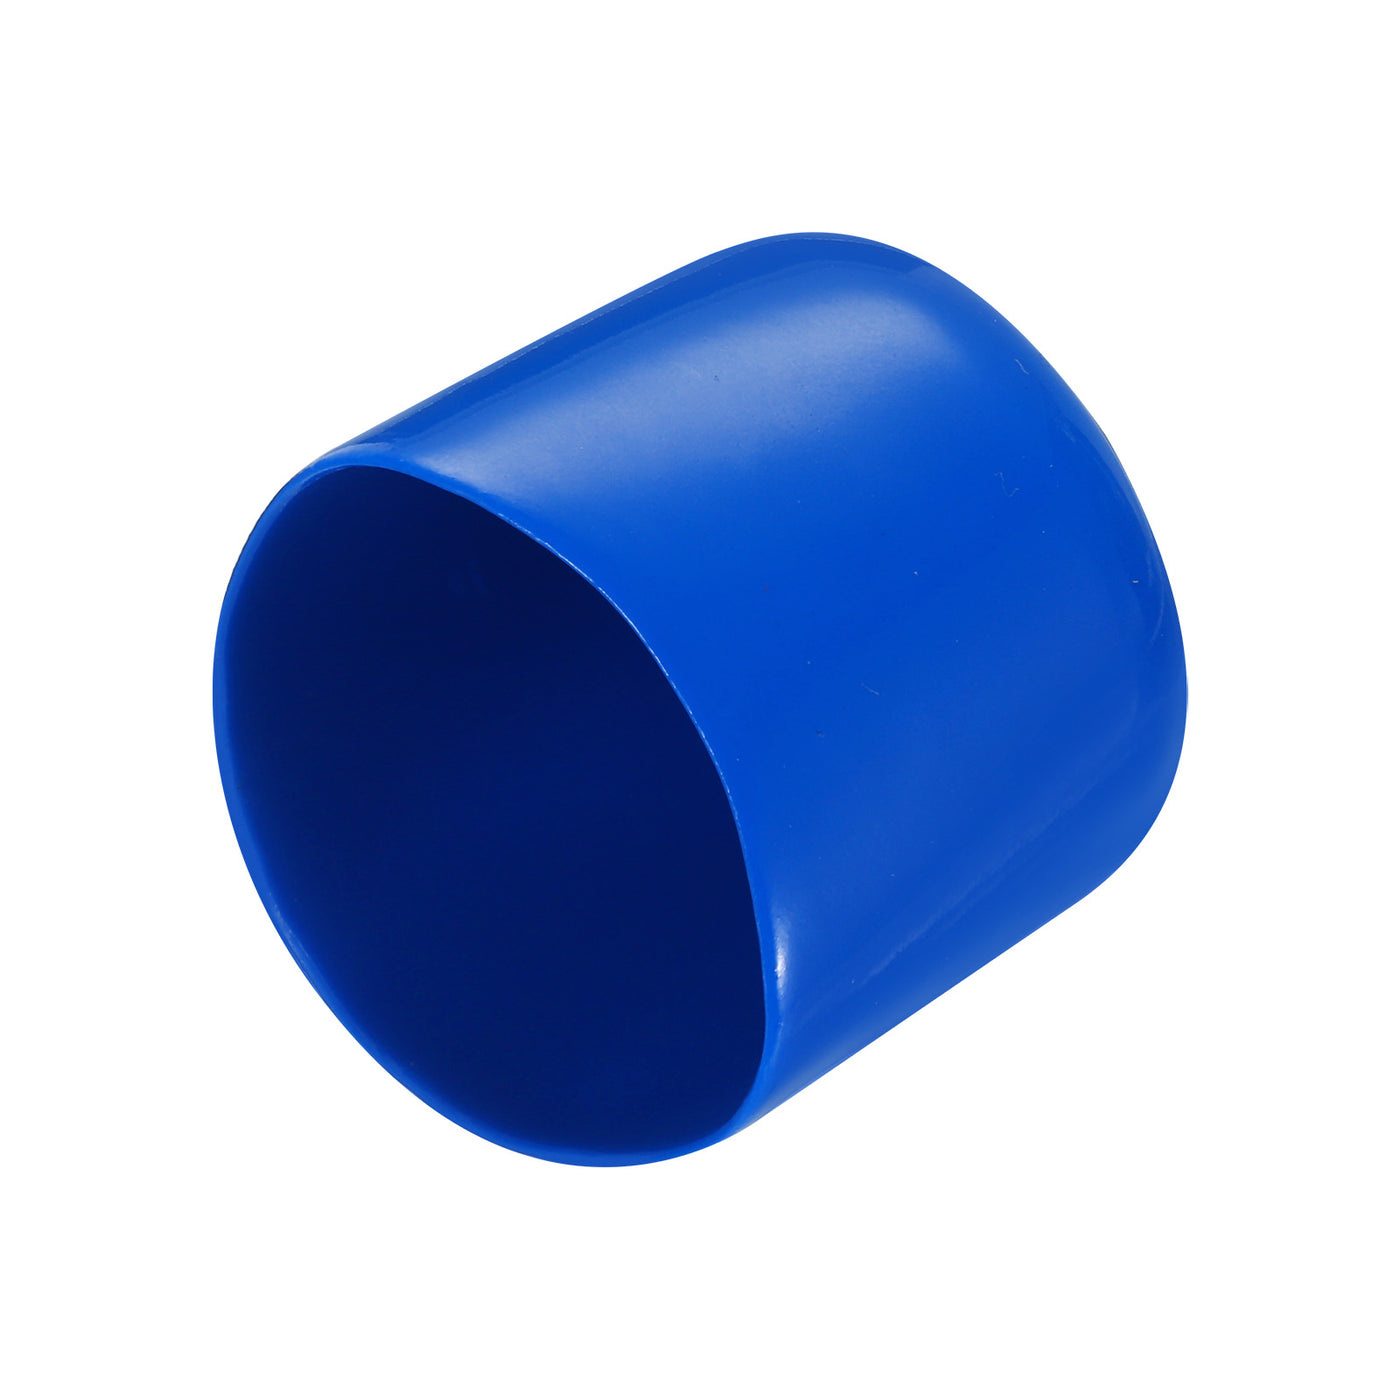 uxcell Uxcell 20pcs Rubber End Caps 34mm ID Vinyl PVC Round Tube Bolt Cap Cover Screw Thread Protectors Blue